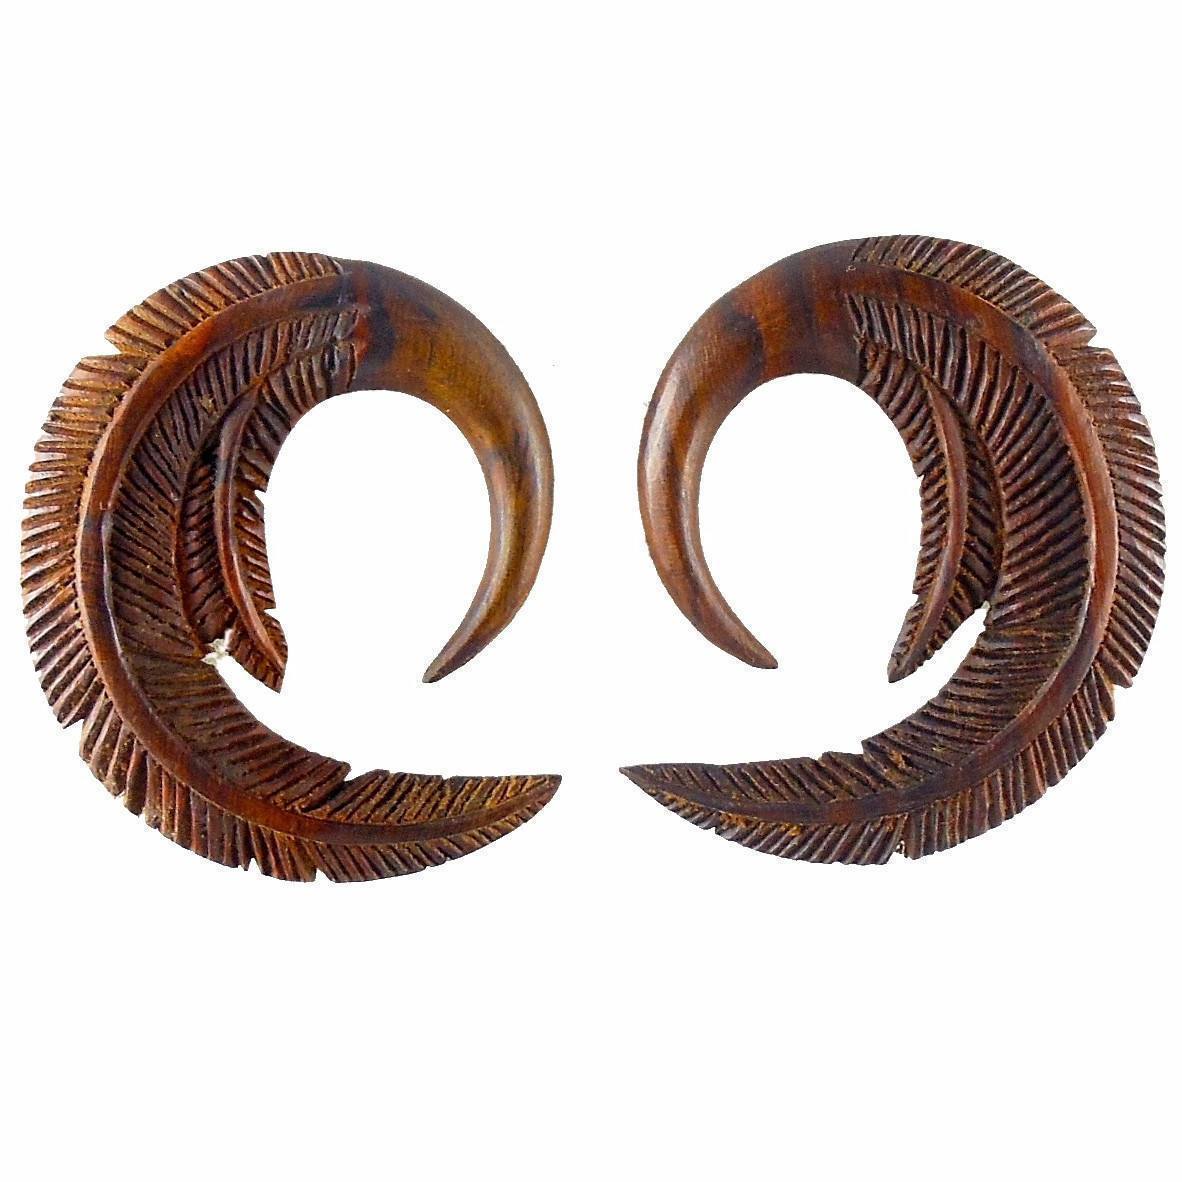 Gauges :|: Feather. 2 gauge Rosewood Earrings. 1 3/4 inch W X 2 inch L | Wood Body Jewelry